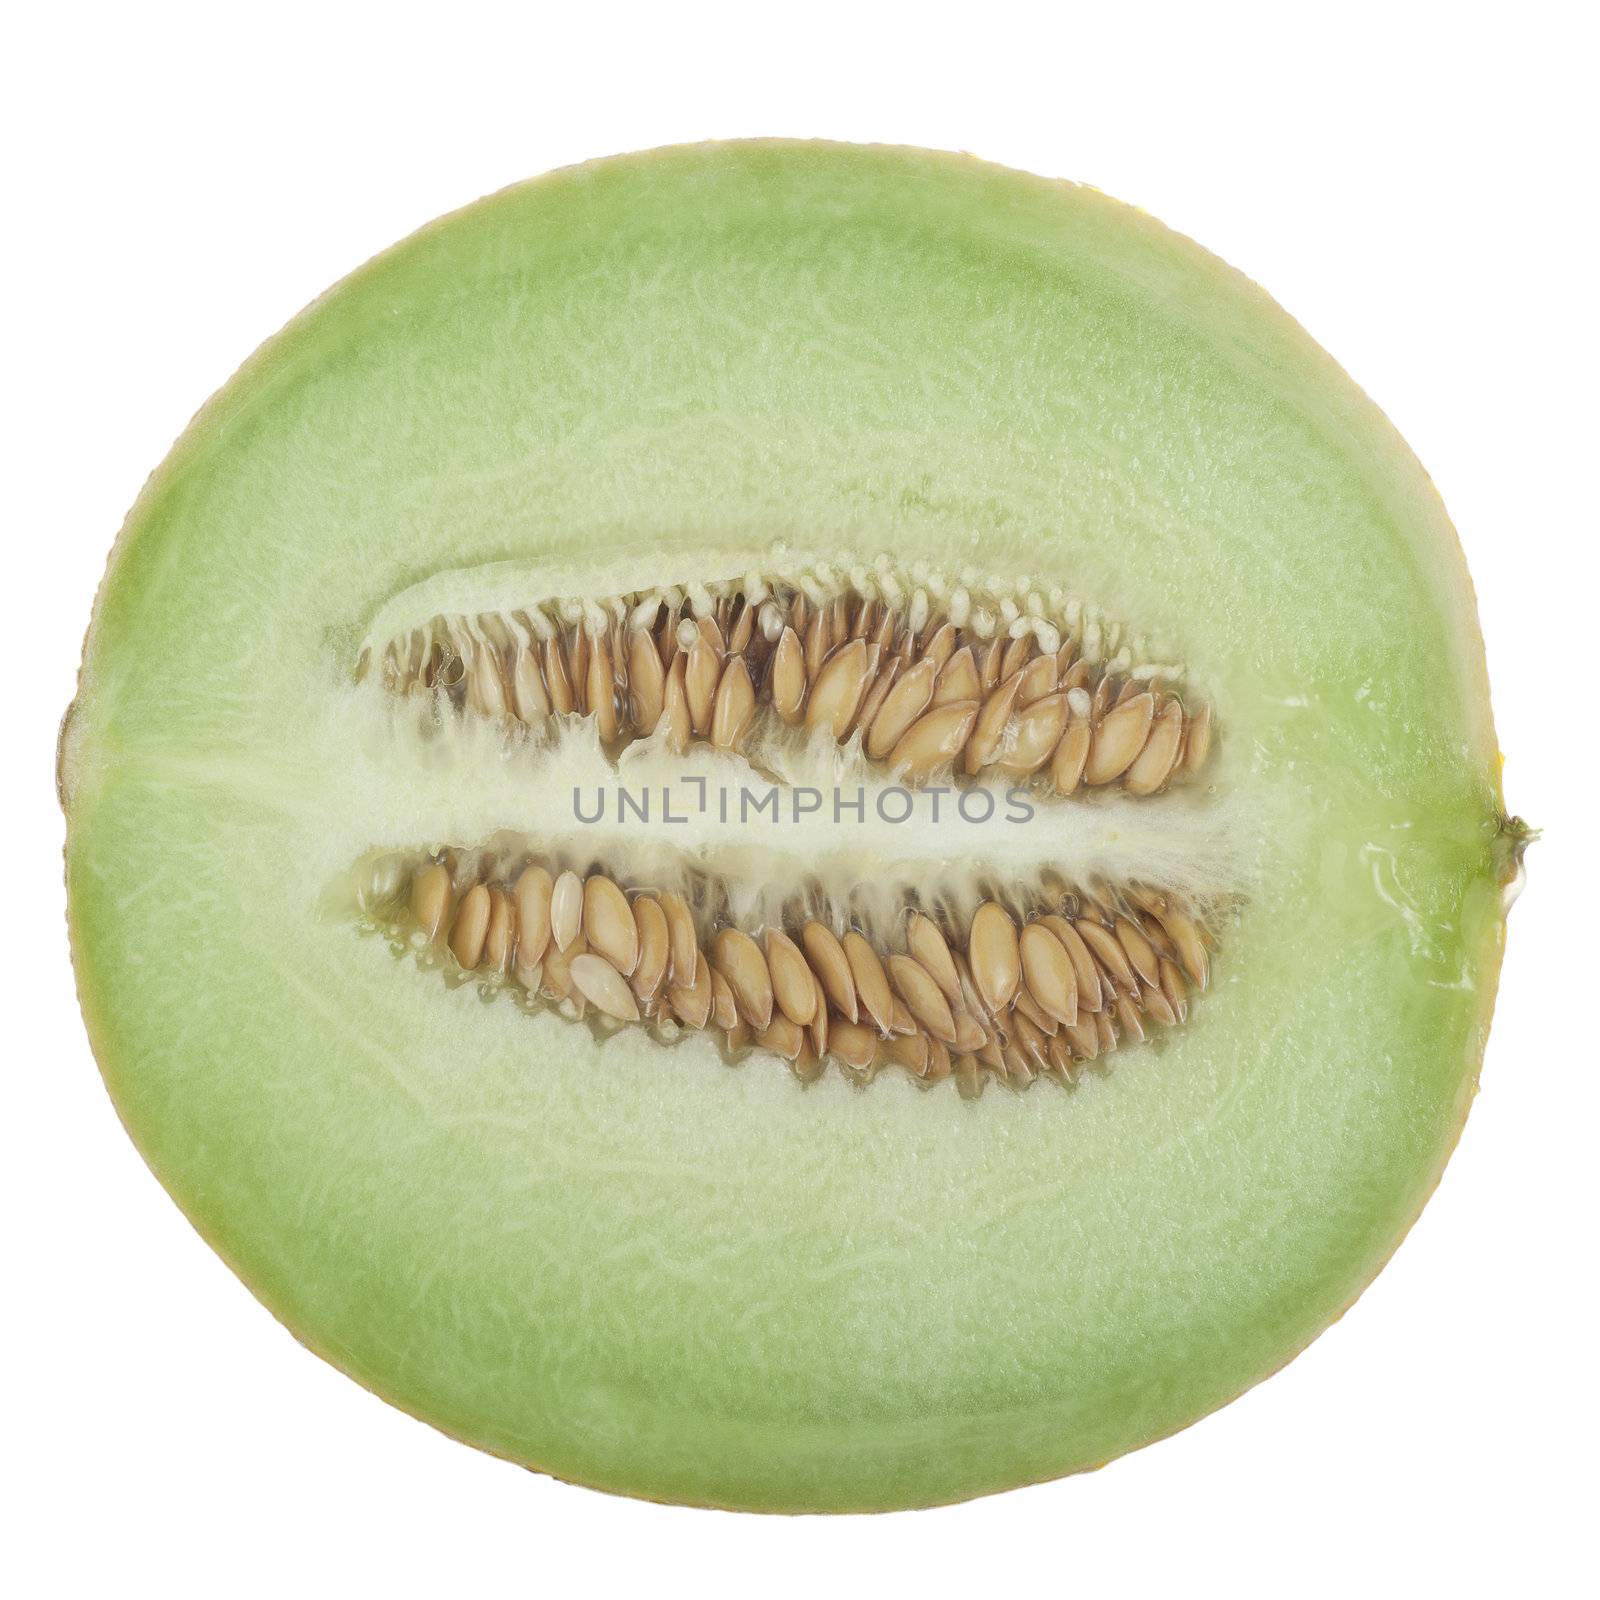 Half a honeydew melon on a white background.